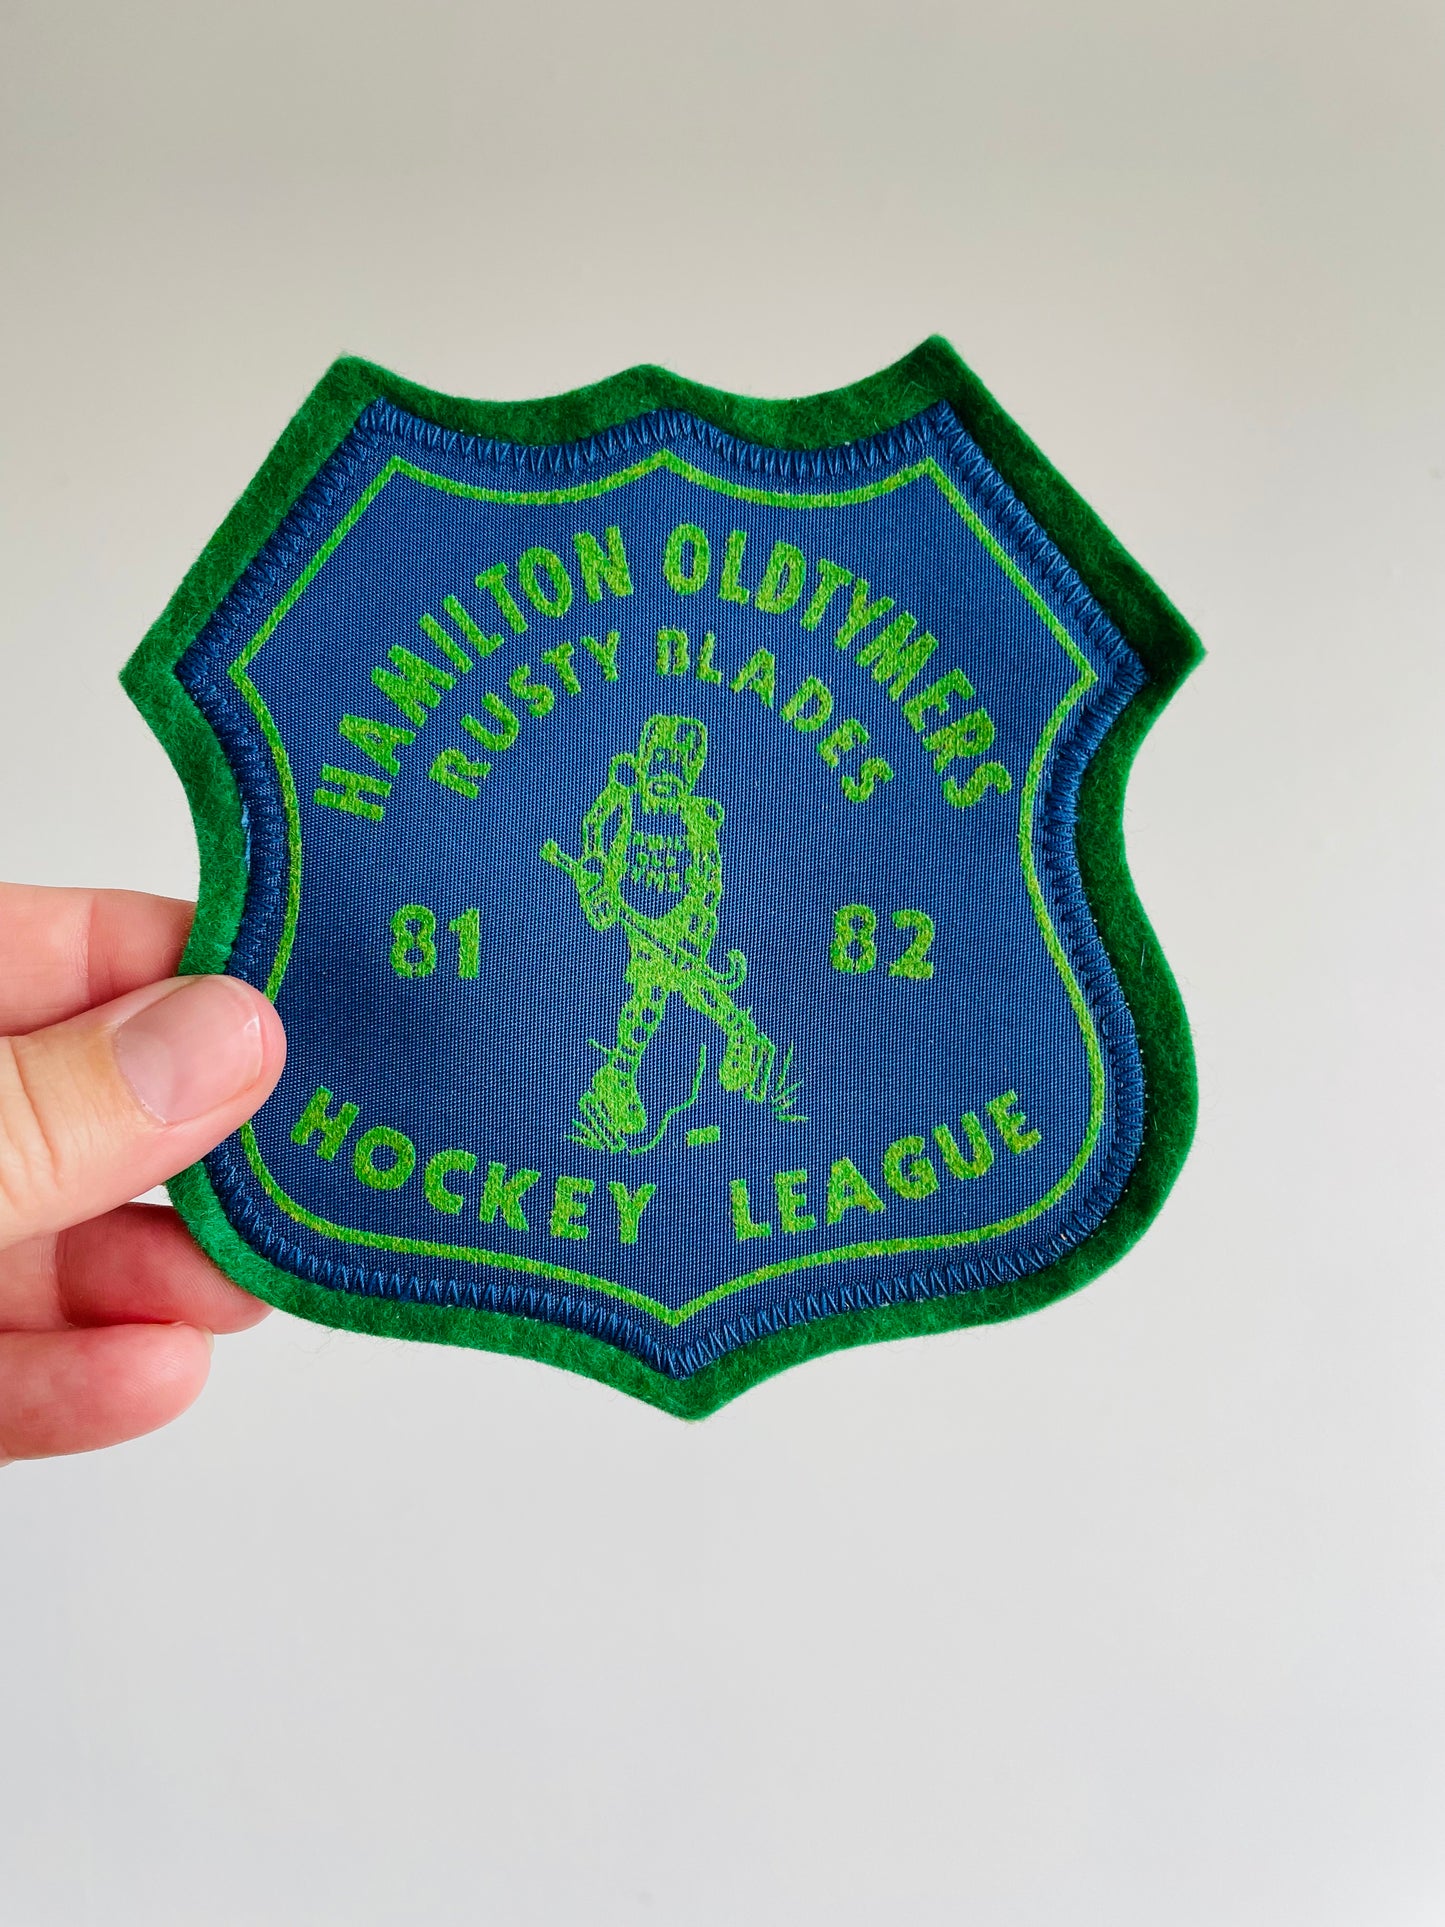 Vintage Felt Hockey Patch - 1981 / 1982 Rusty Blades Hamilton Oldtymers Hockey League #1